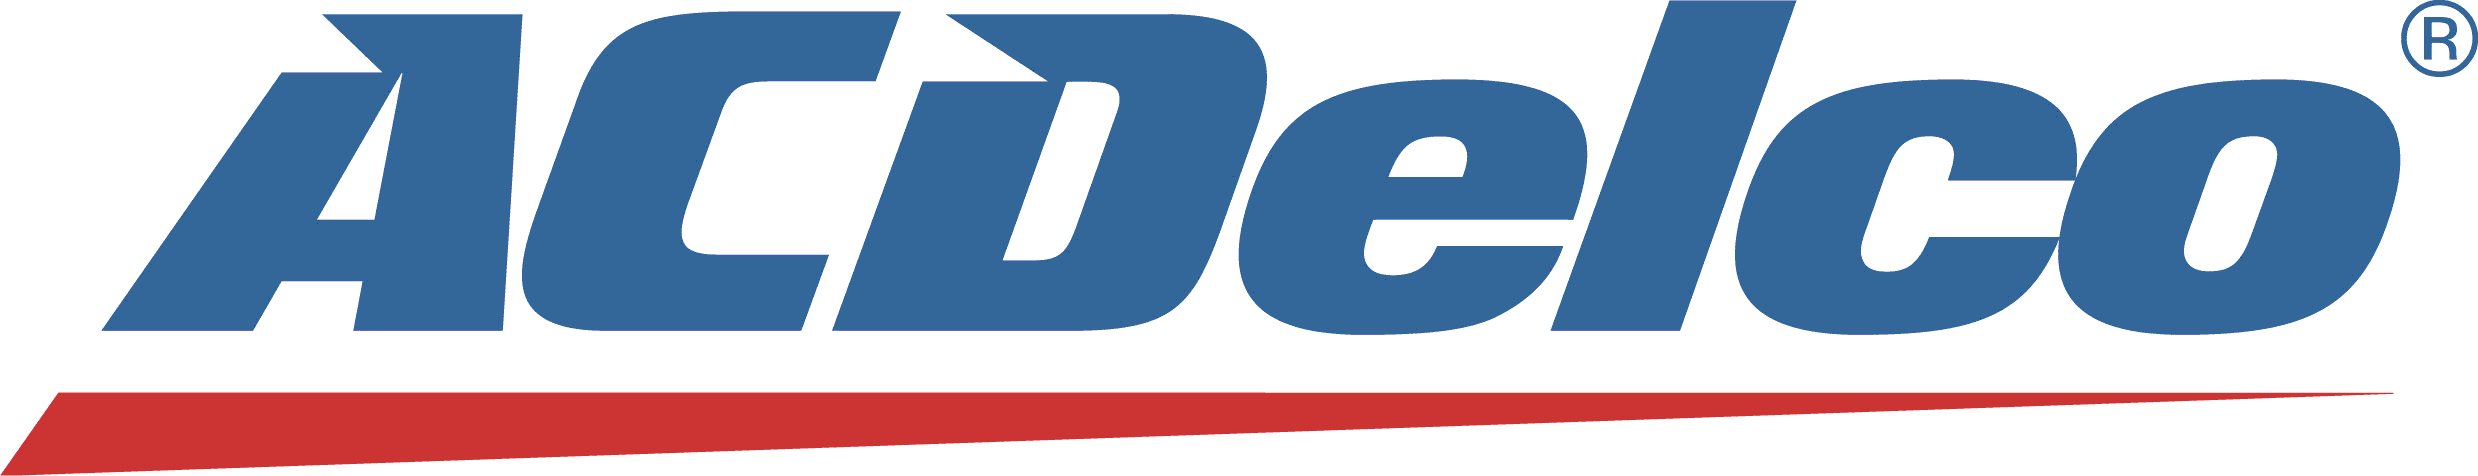 AC_Delco_Logo.png - 22551 Bytes